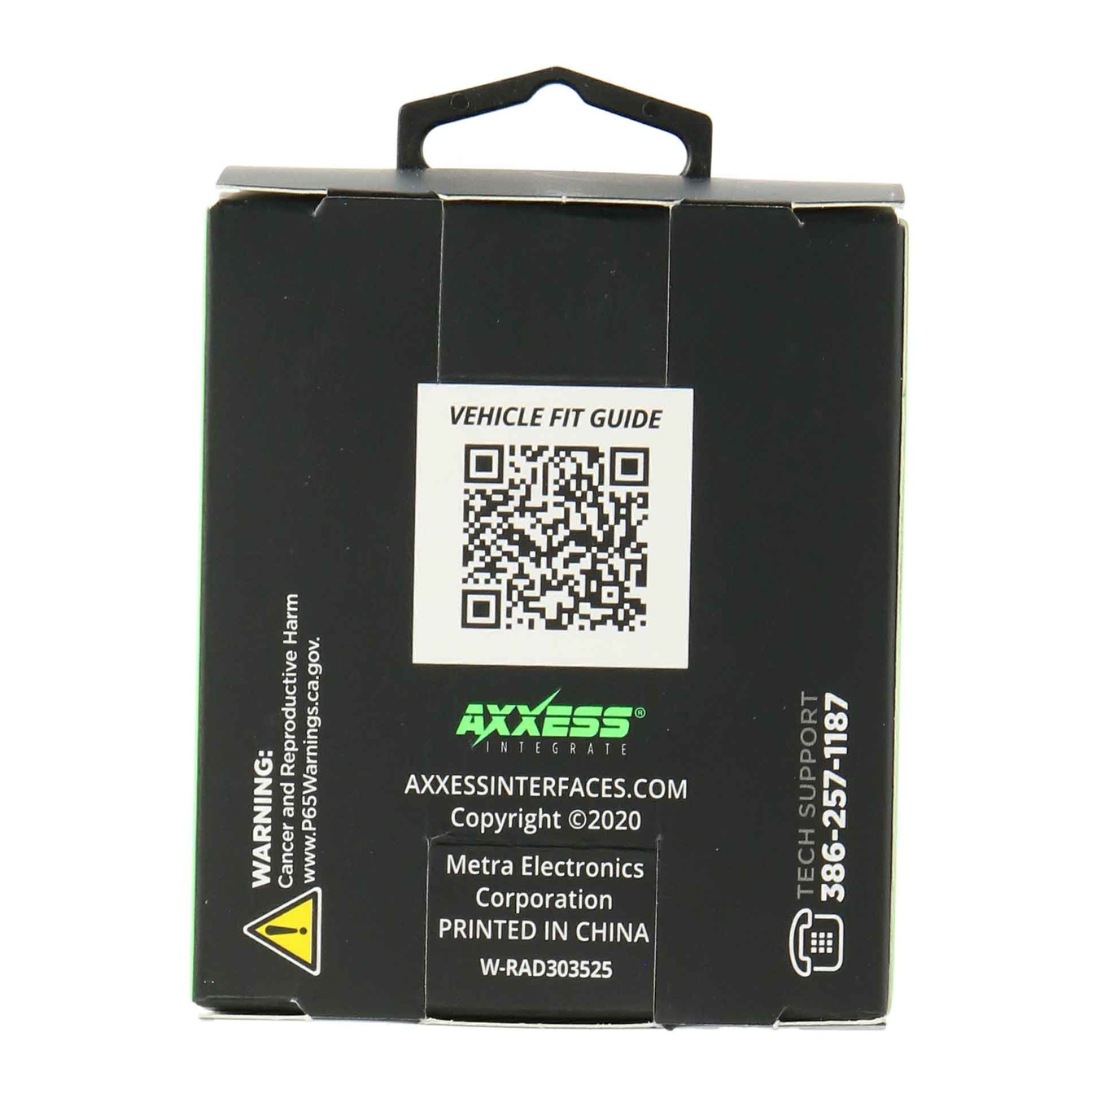 Axxess AXSP-HK Amplifier Retention Wiring Interface for Hyundai/Kia 2012-Up